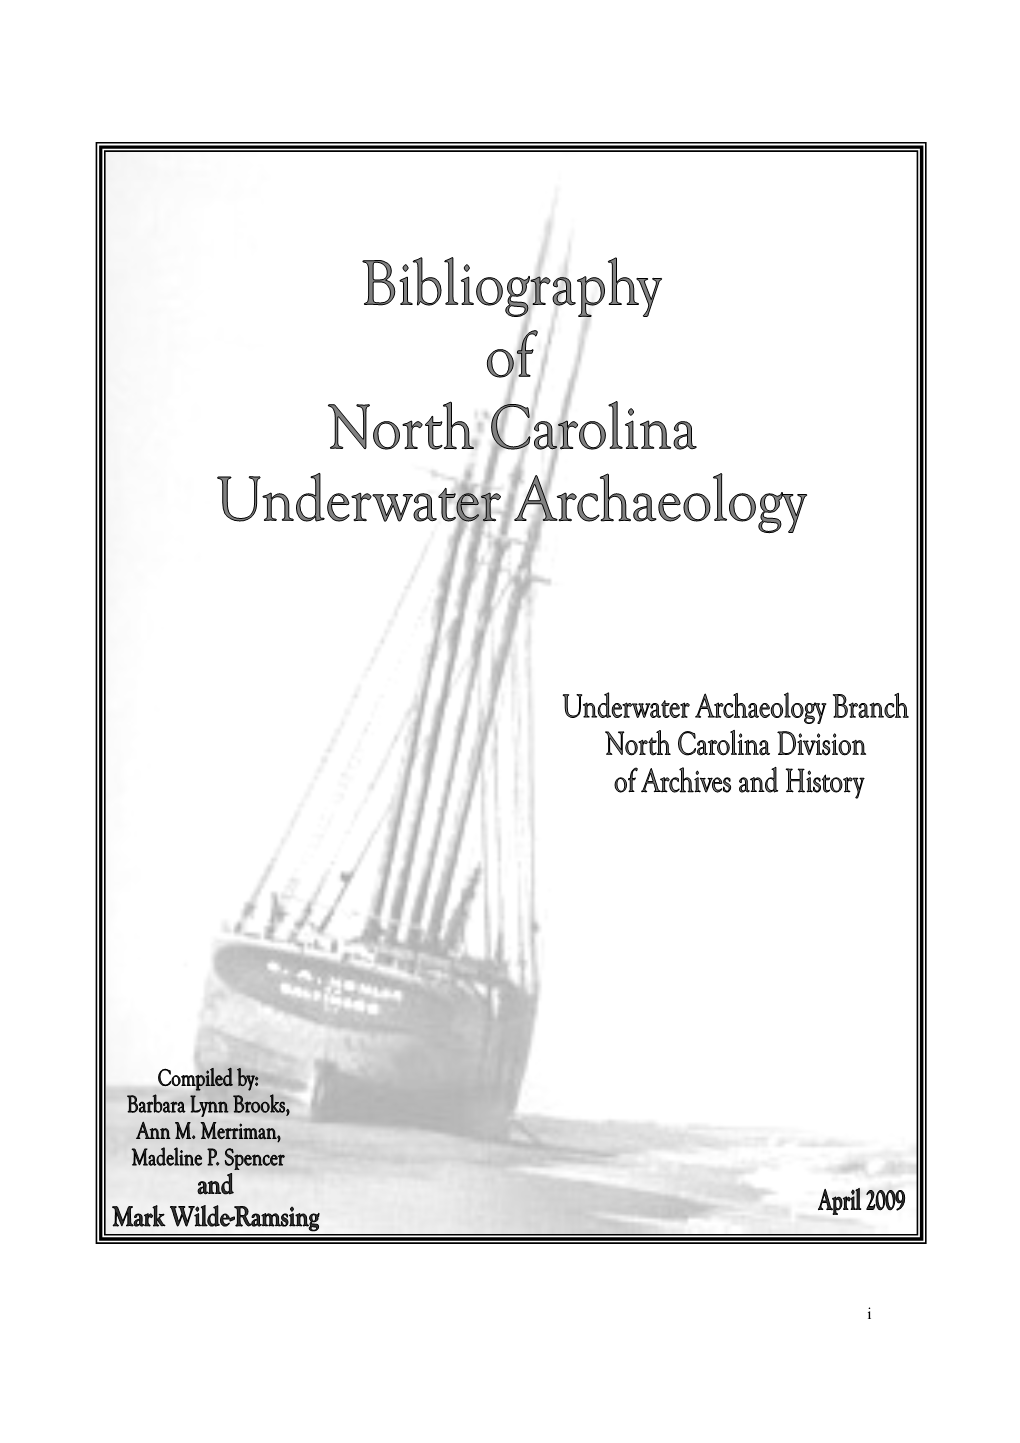 Bibliography of North Carolina Underwater Archaeology